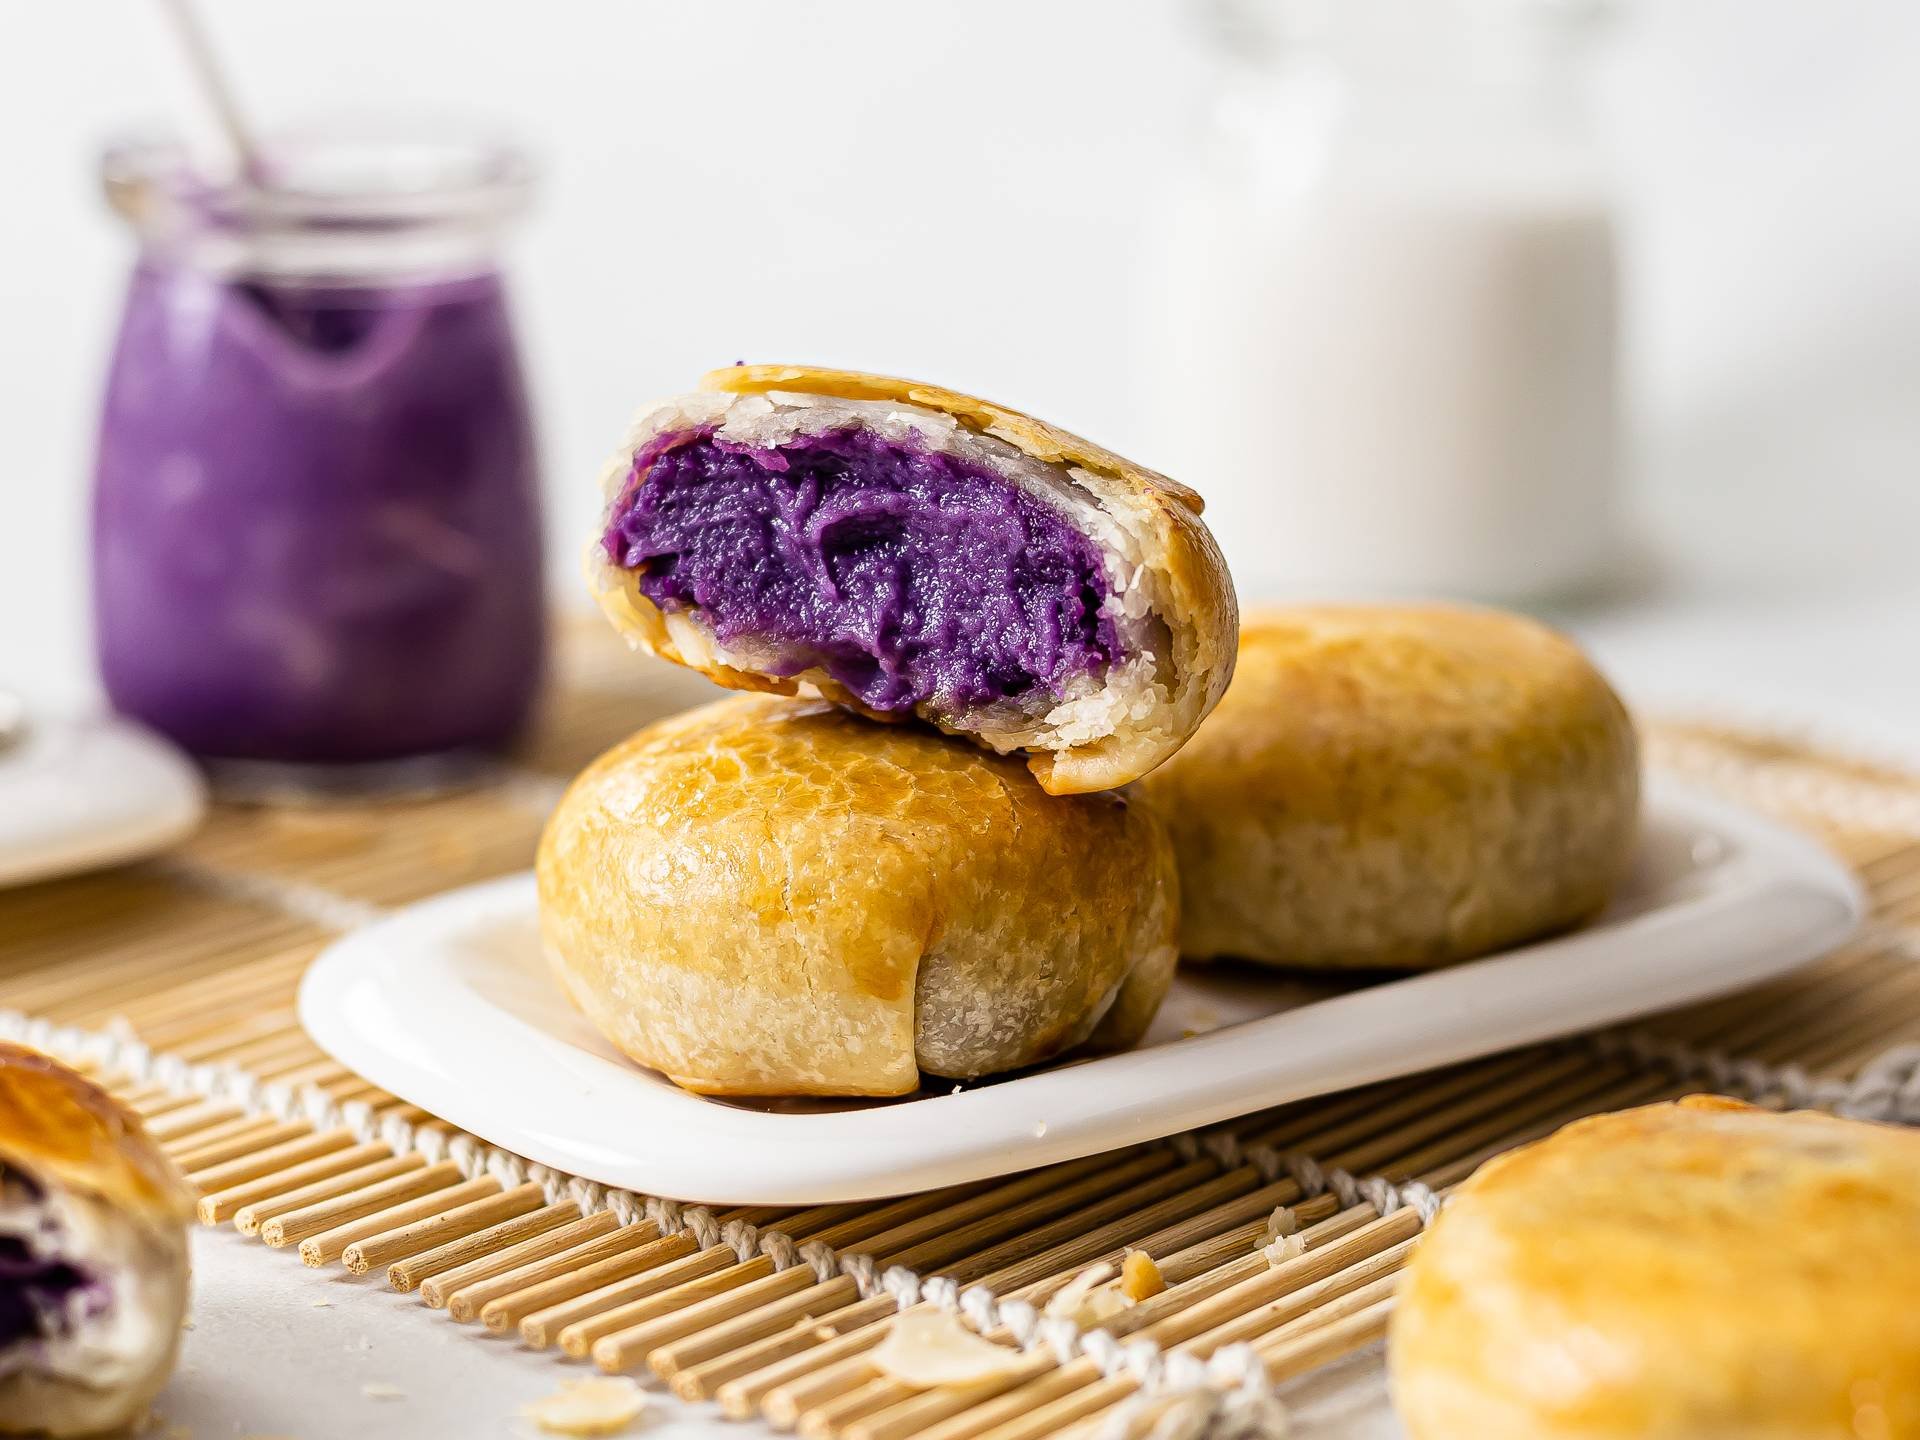 ube-hopia-filipino-pastry-with-purple-yam-filling-2c01b4bf3c83646499d96881df0c67c0-1920-q70.jpg